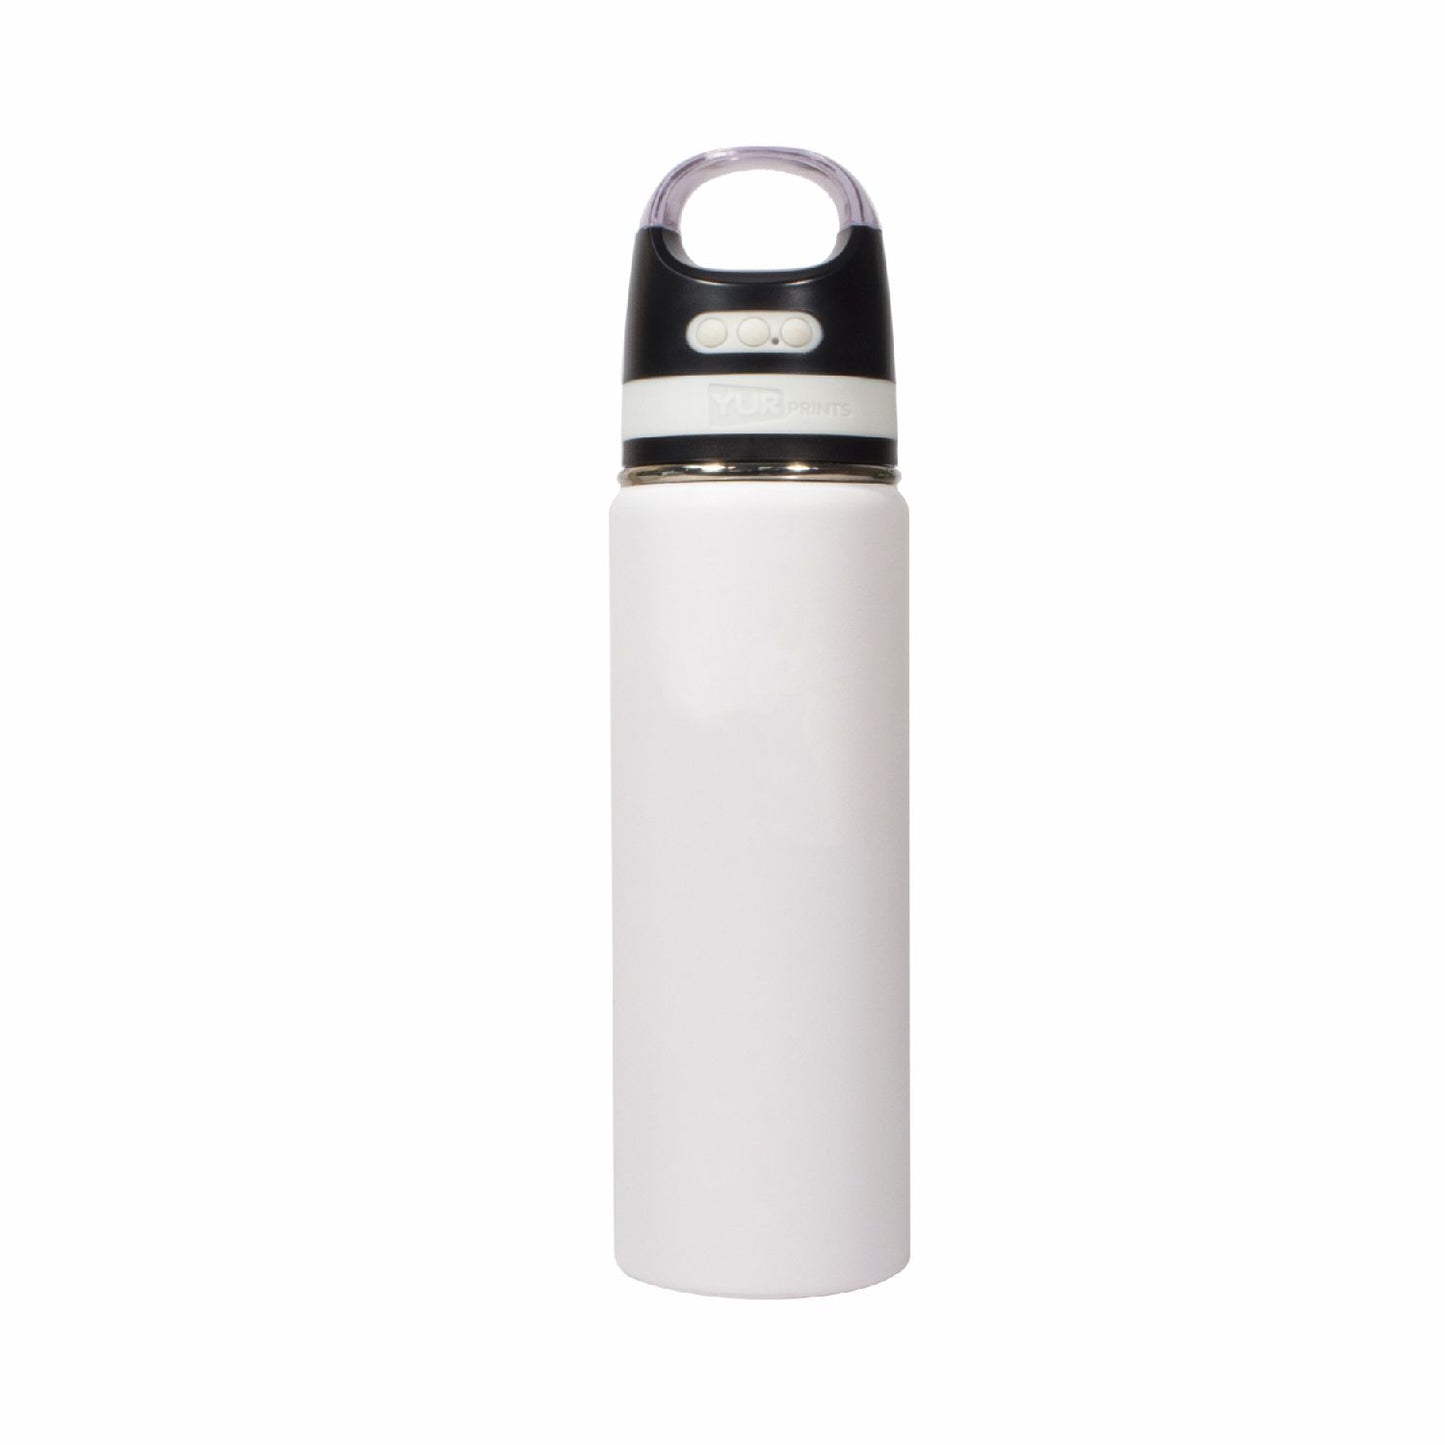 Sanremo Bottle With Bluetooth Speaker - 25oz